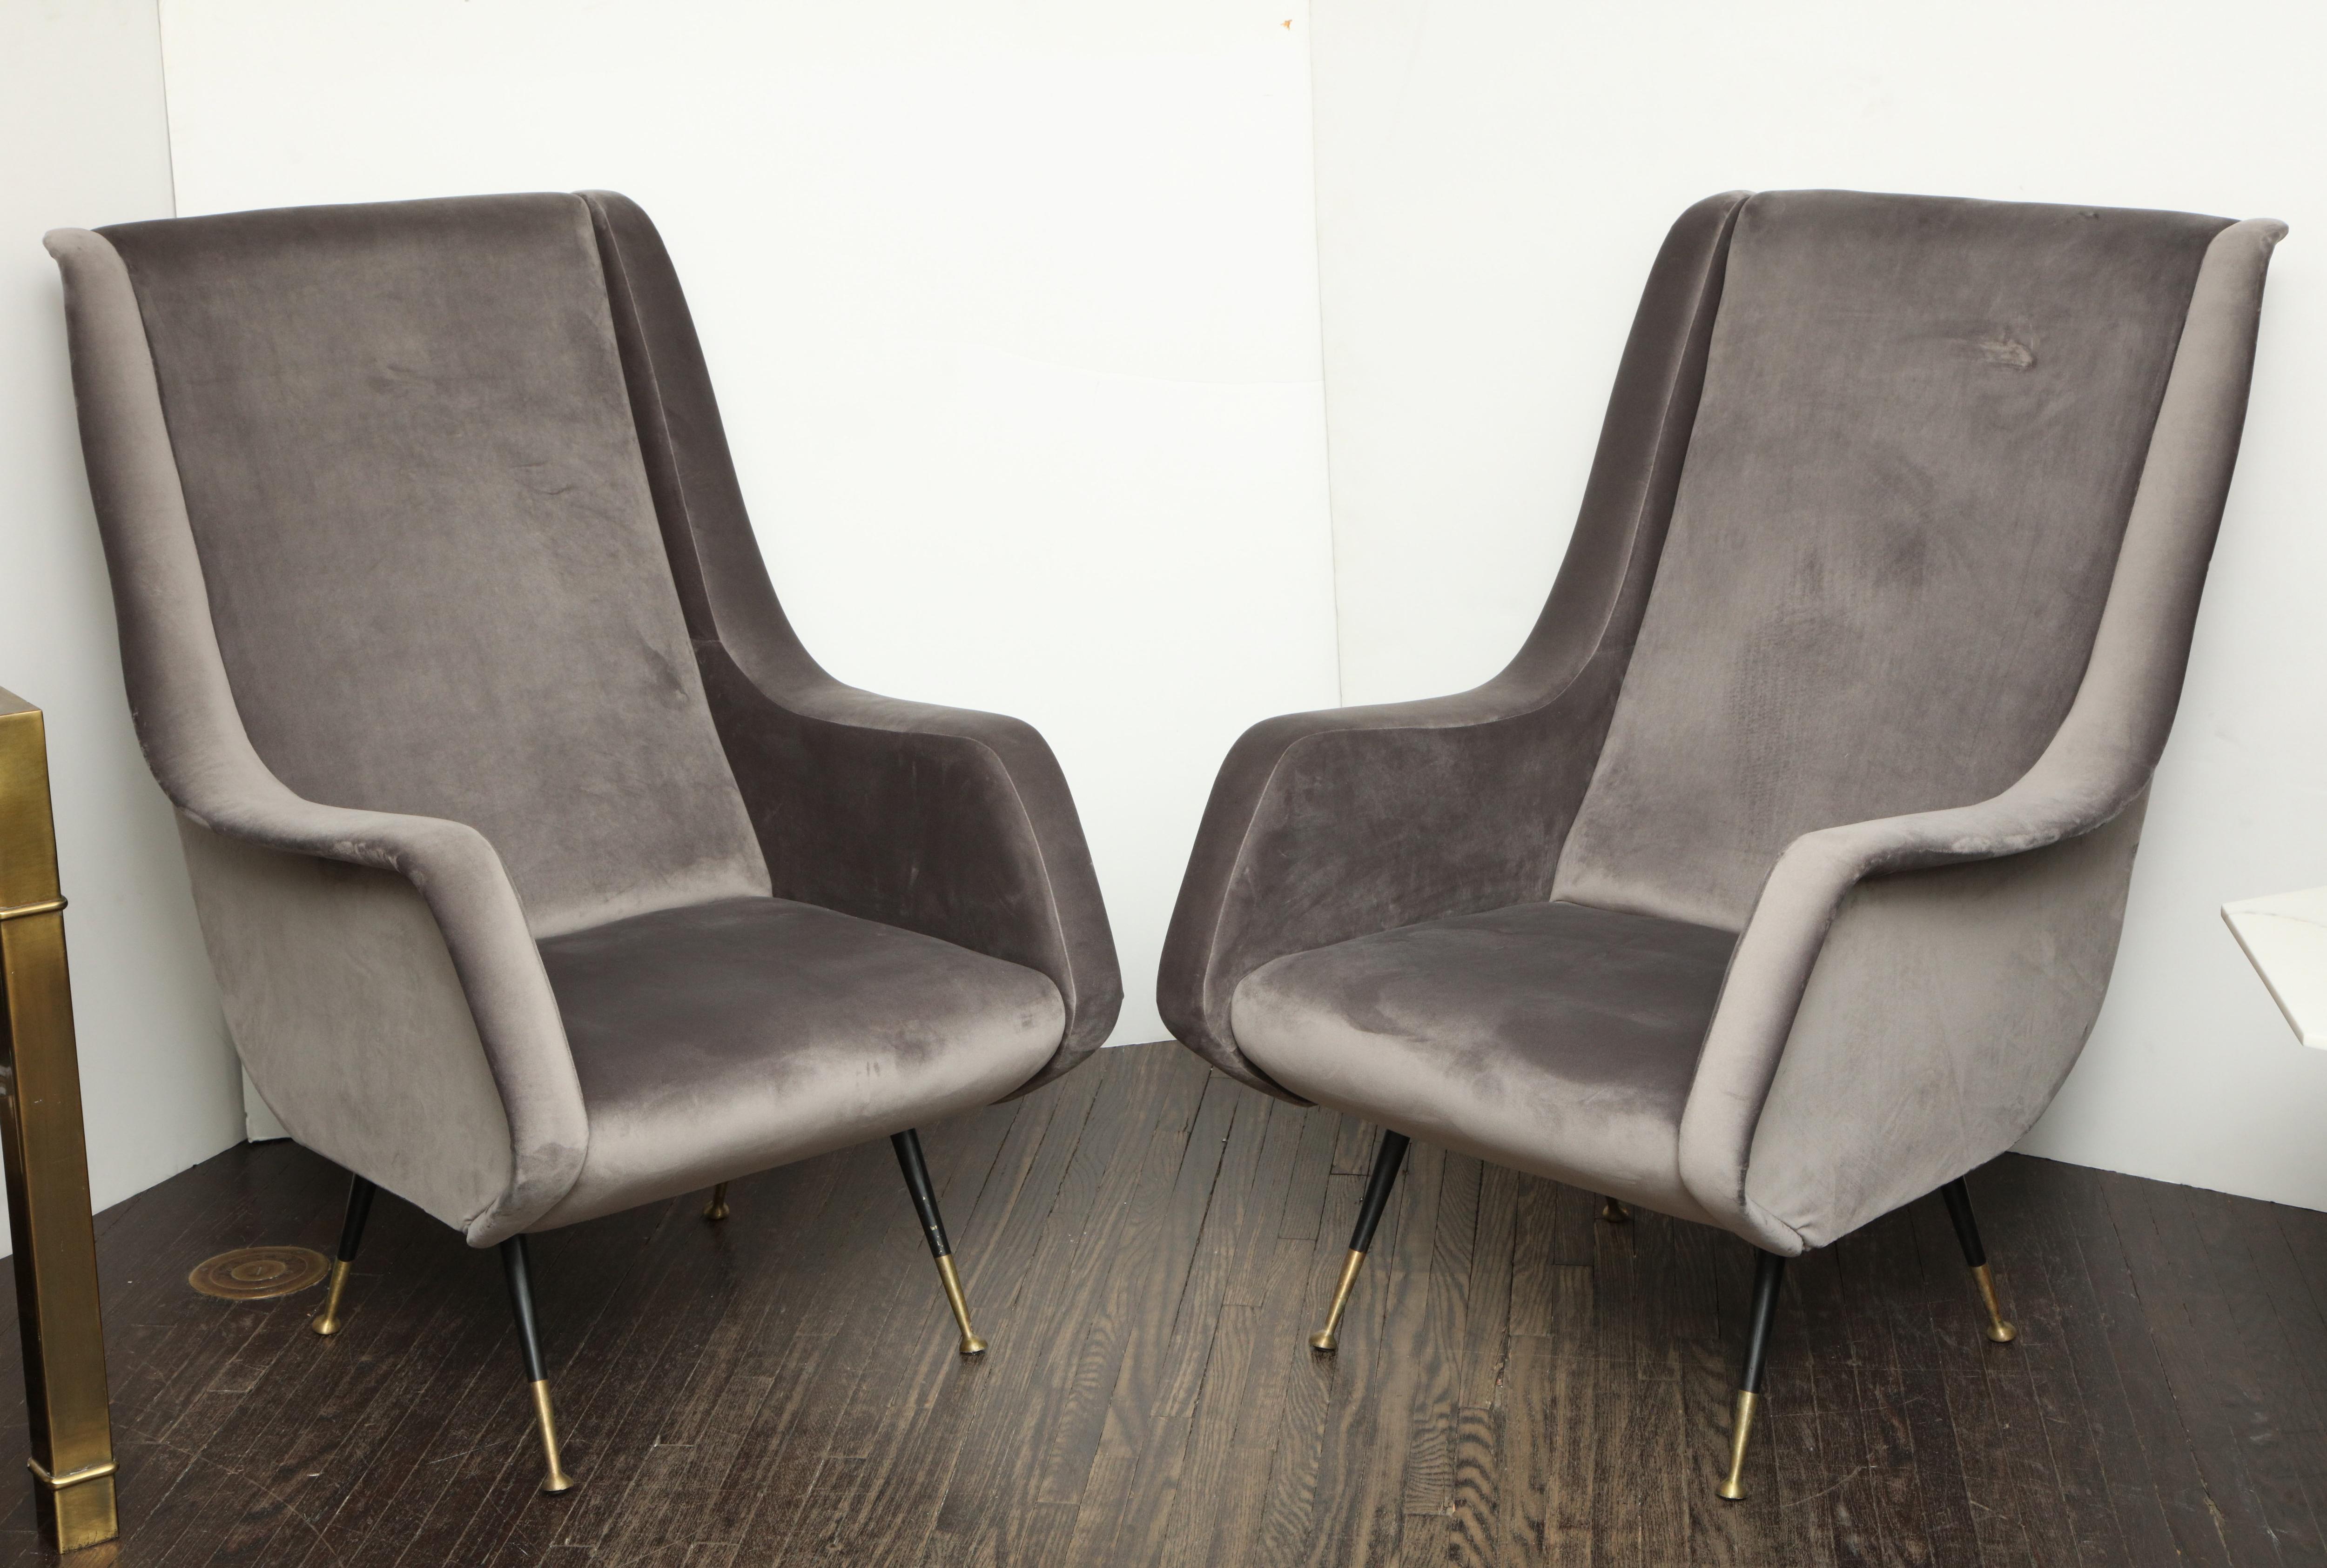 Pair of Poltrone Aldo Morbelli armchair in gray velvet

COM upholstery is available.